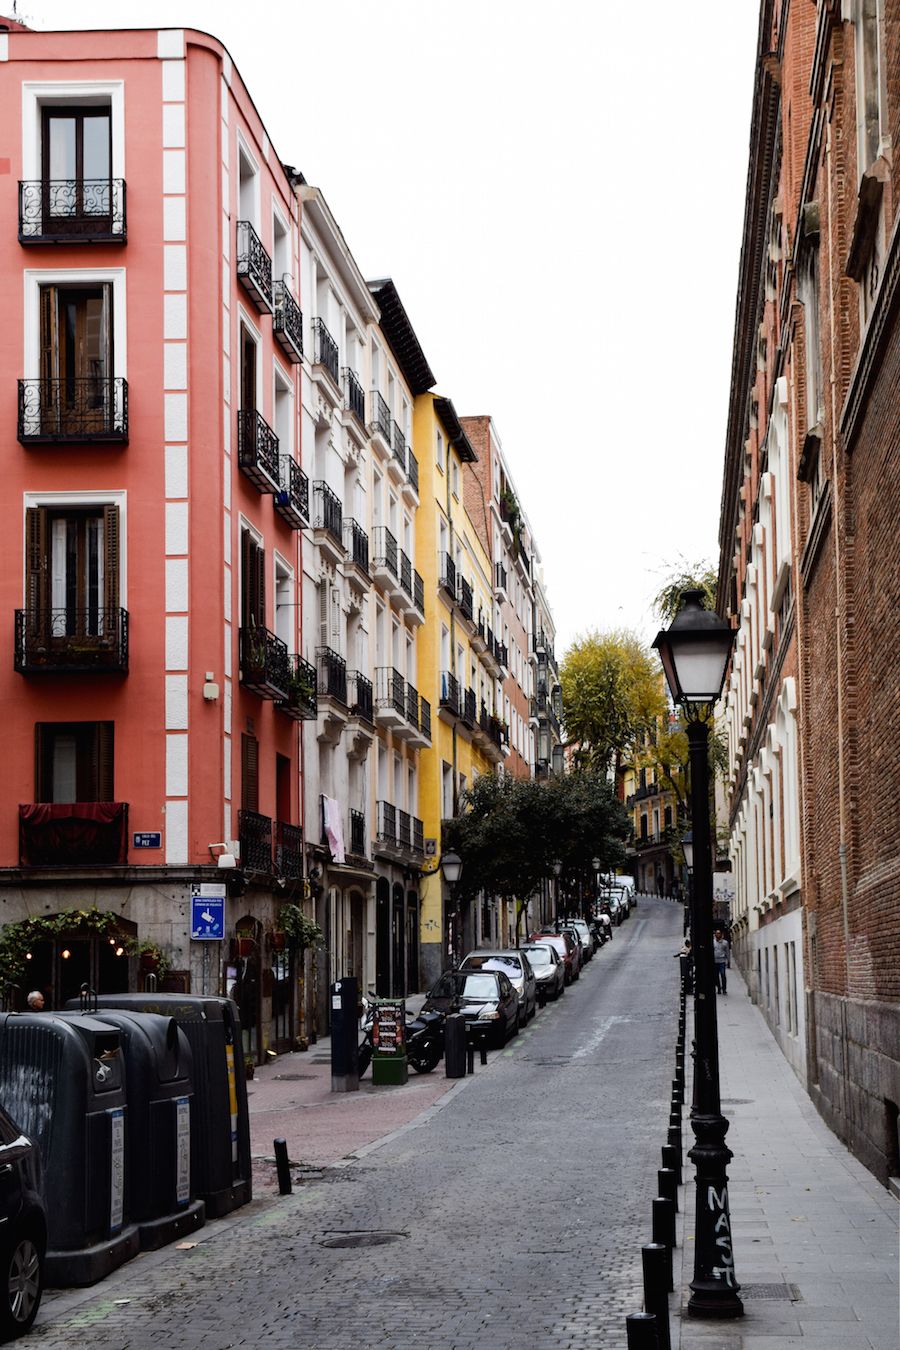 A street in Malasaña, Madrid